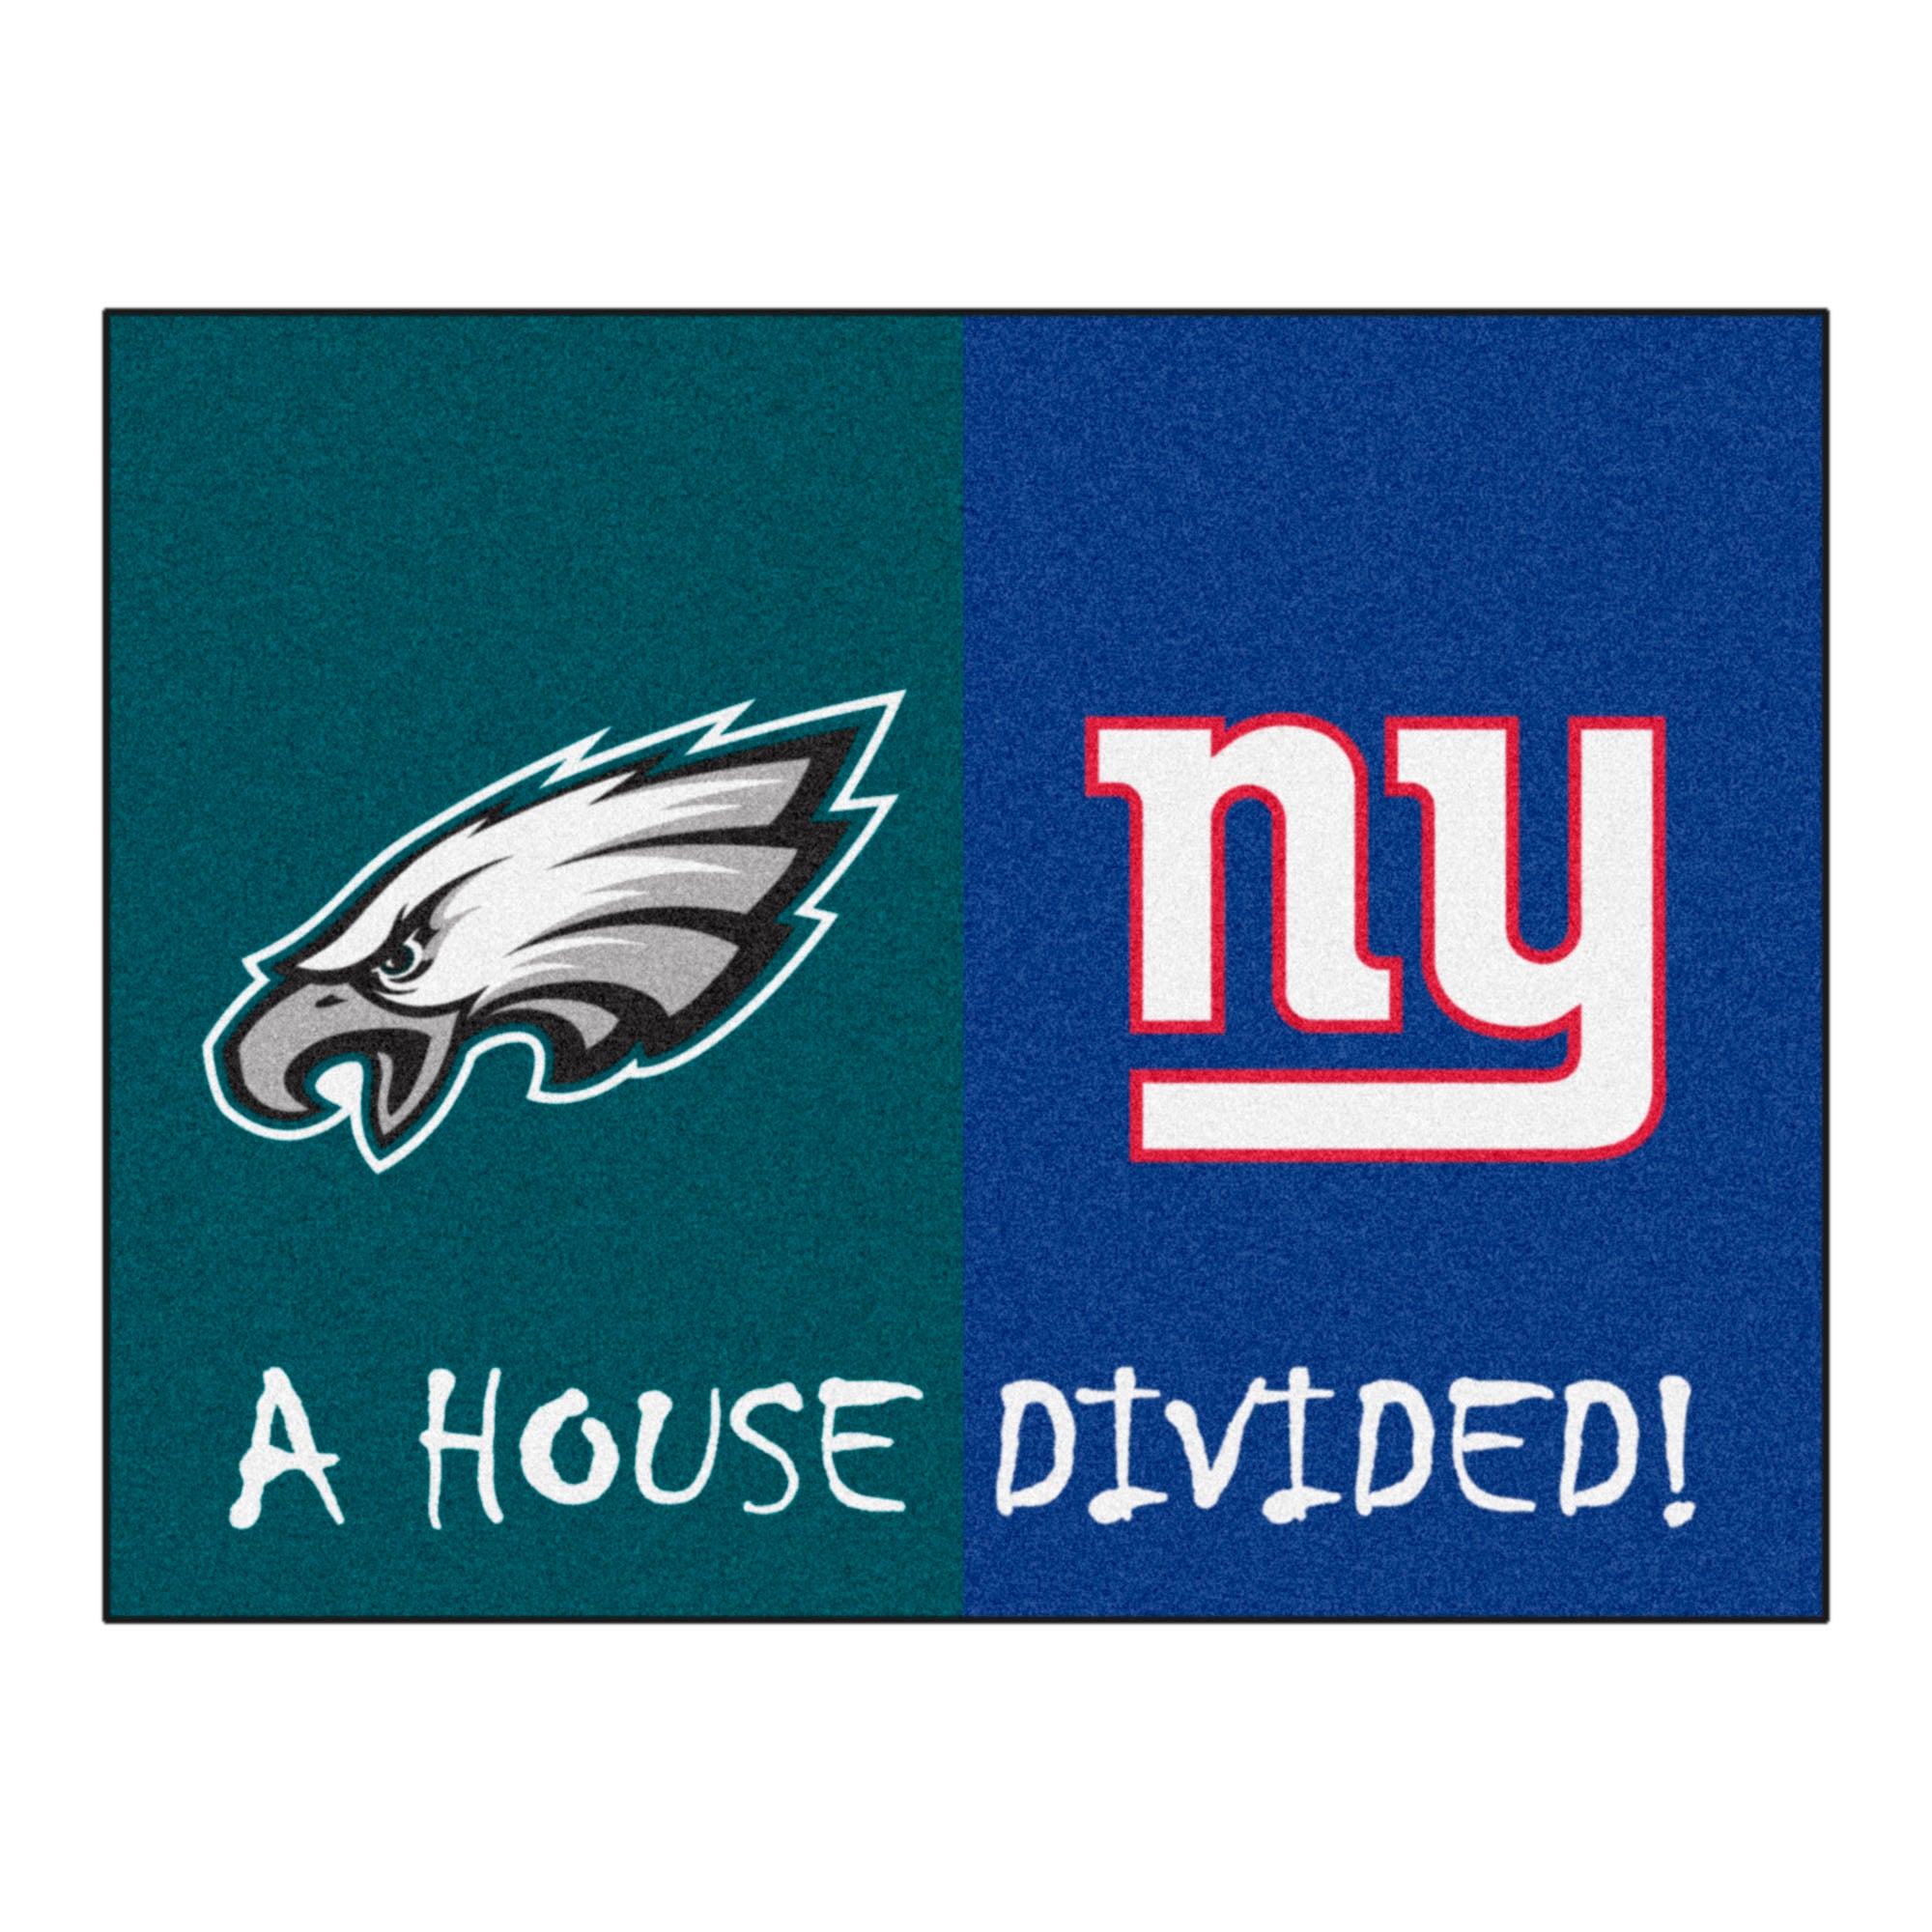 NFL House Divided - Eagles / Giants House Divided Mat